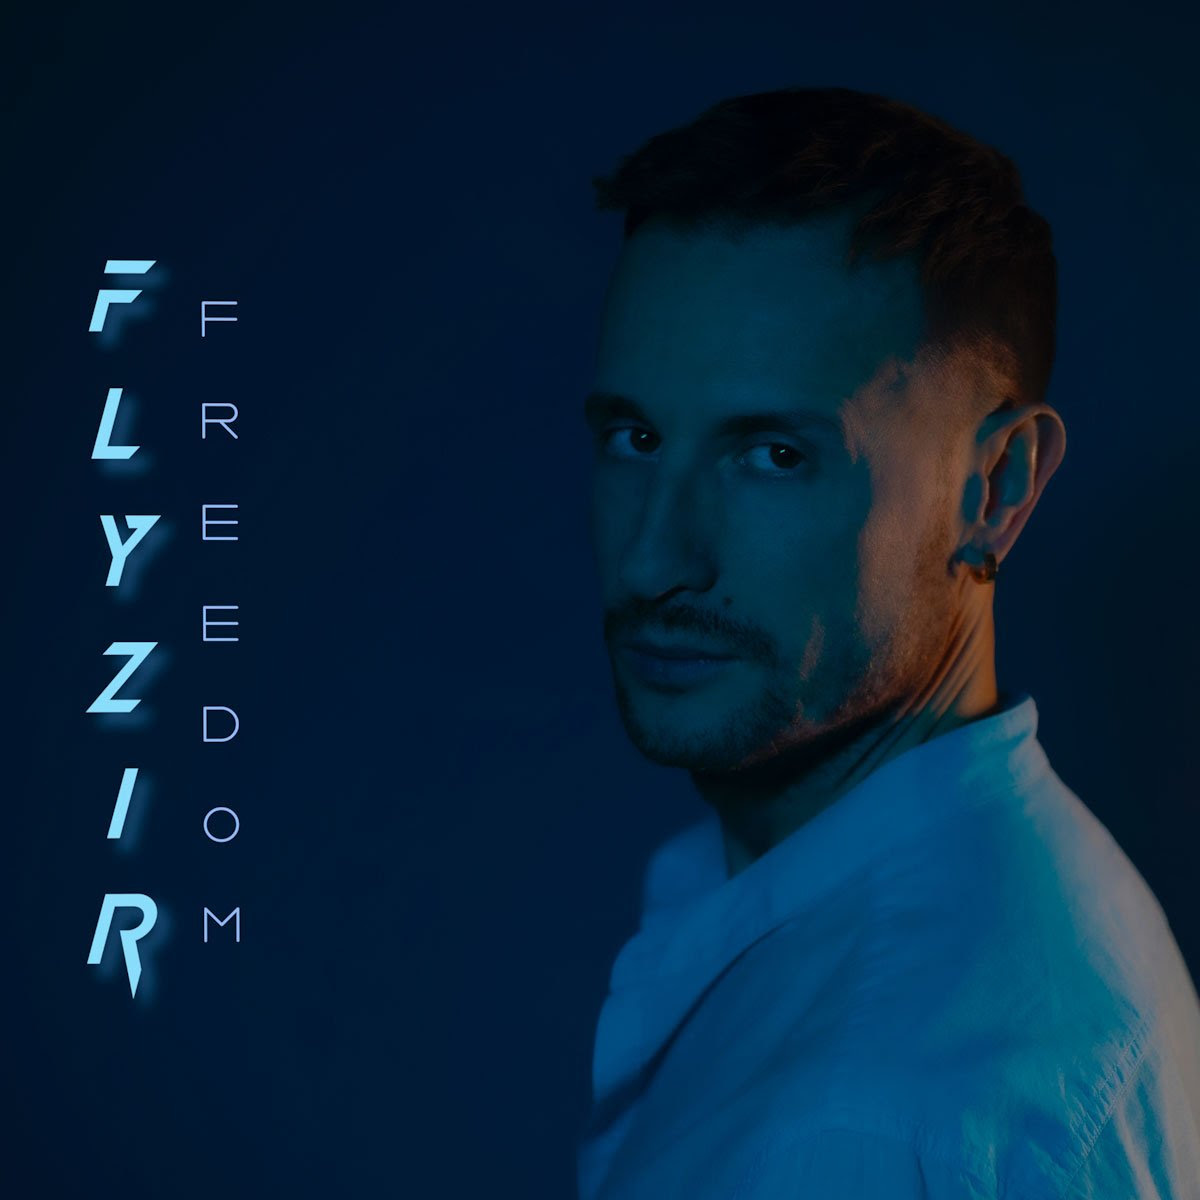 FLYZIR: da venerdì 5 luglio in radio il singolo d’esordio “FREEDOM”